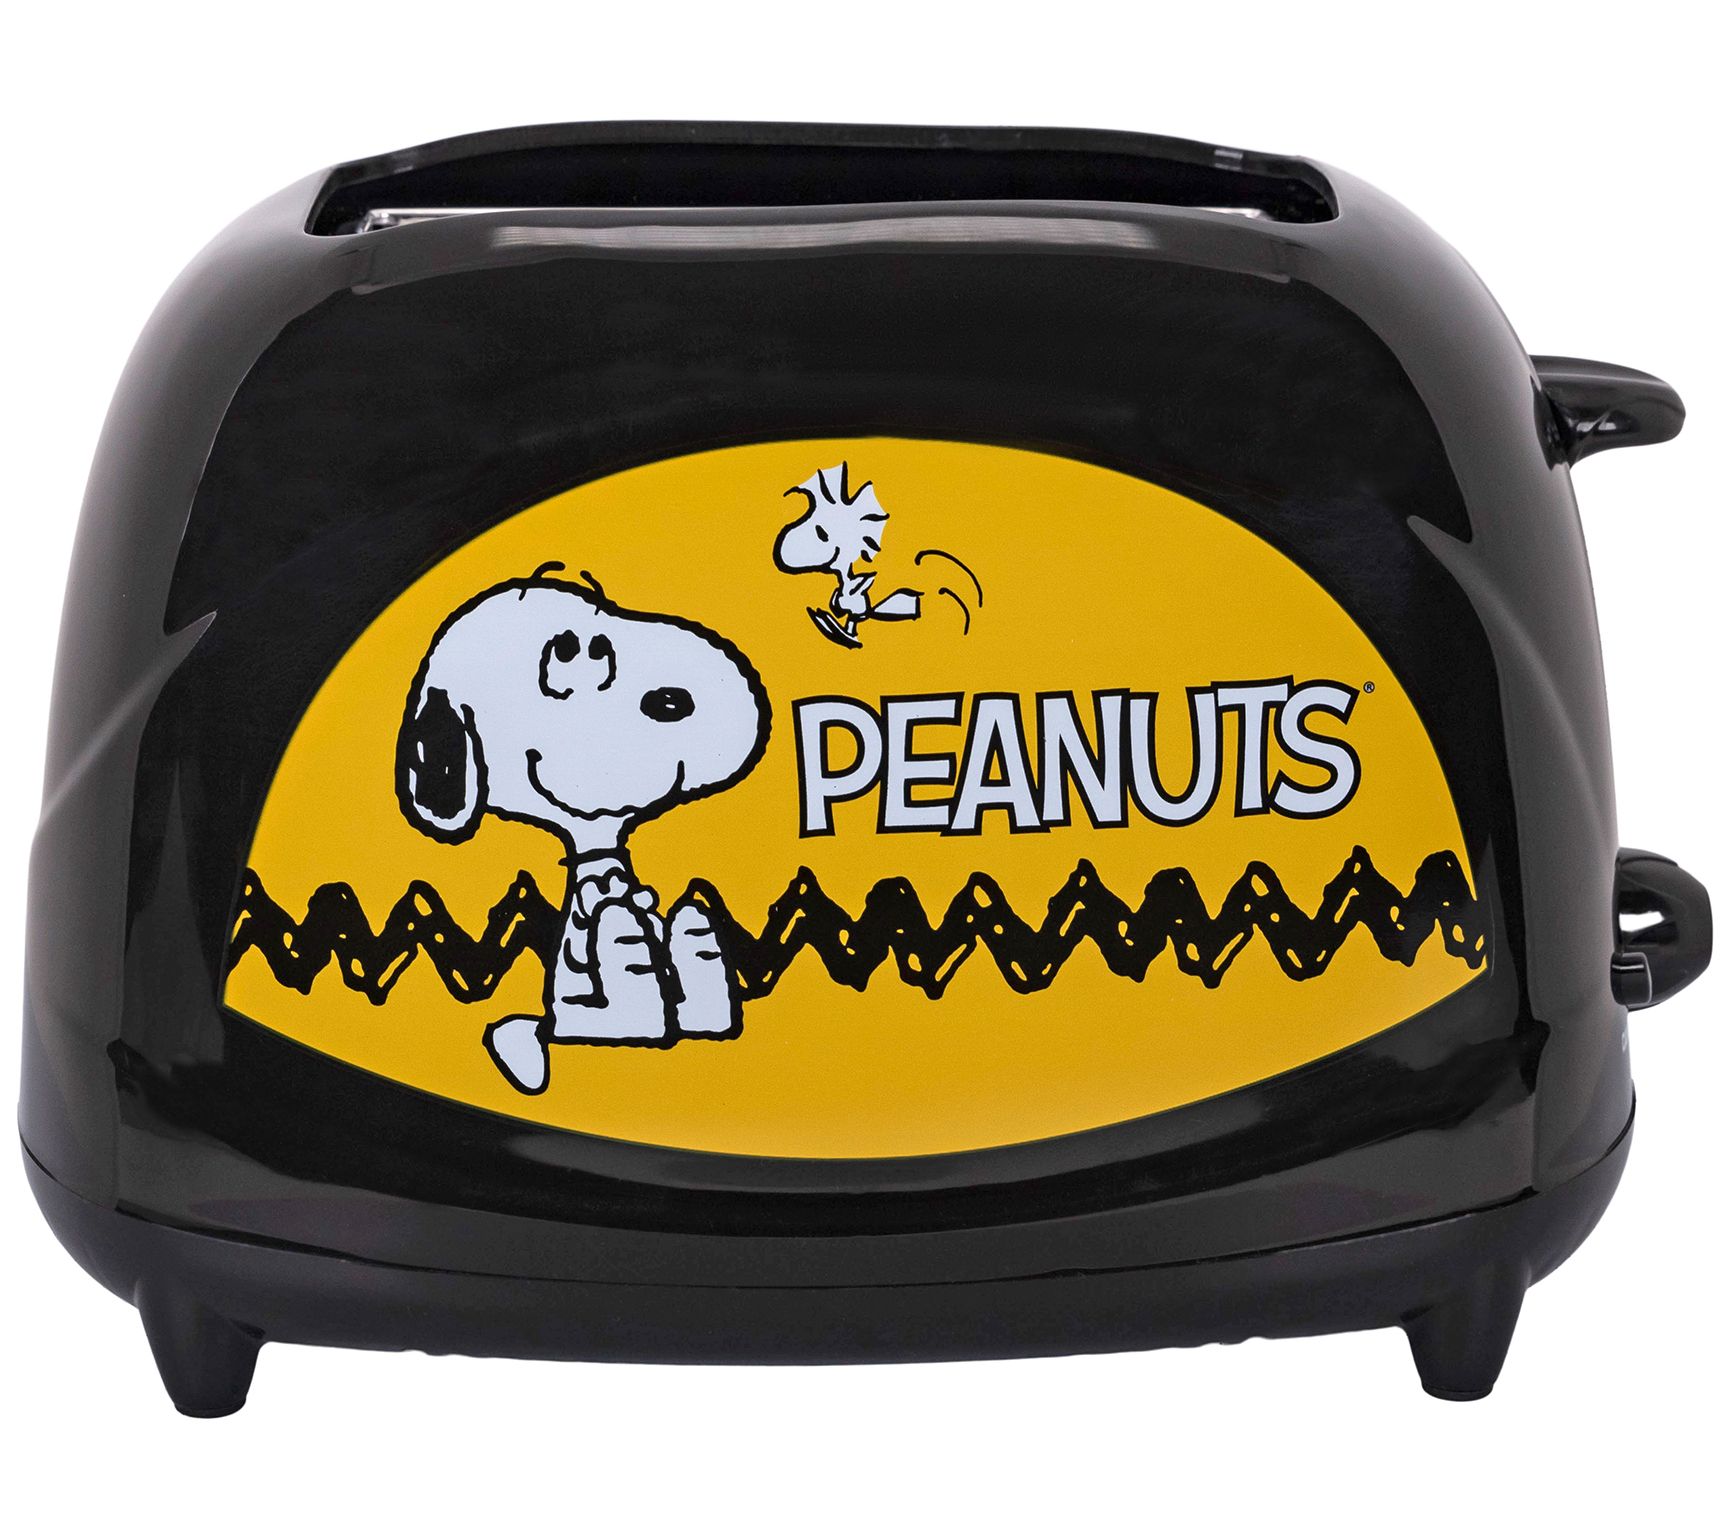 Peanuts Snoopy & Woodstock 2-qt Slow Cooker